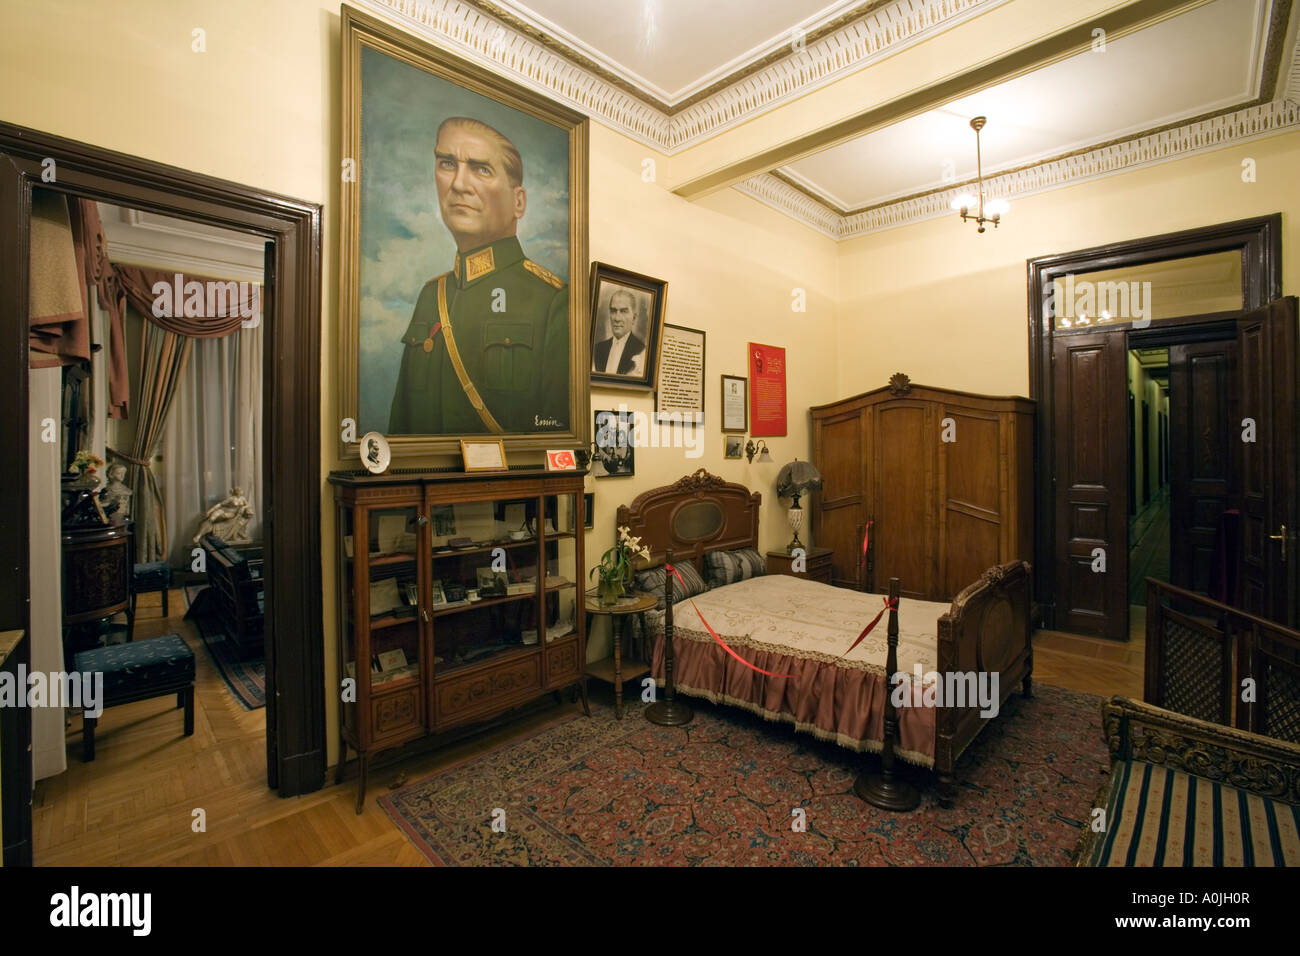 Pera Palas Hotel Istanbul Turkey Ataturks bedroom preserved as a museum Stock Photo